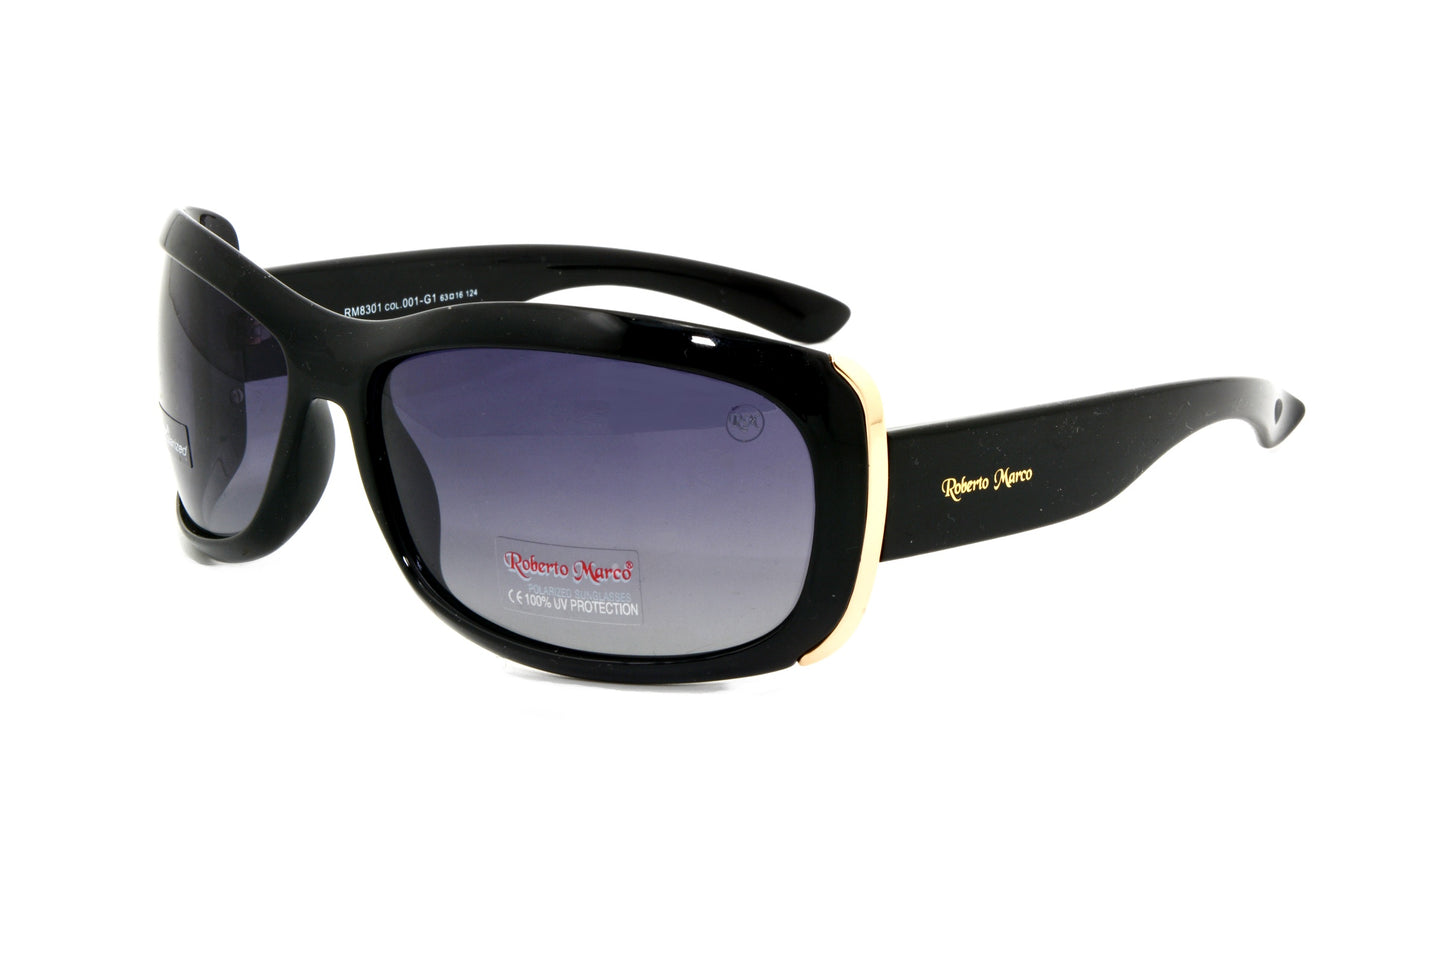 Roberto Marco sunglasses RM8301 001-G1